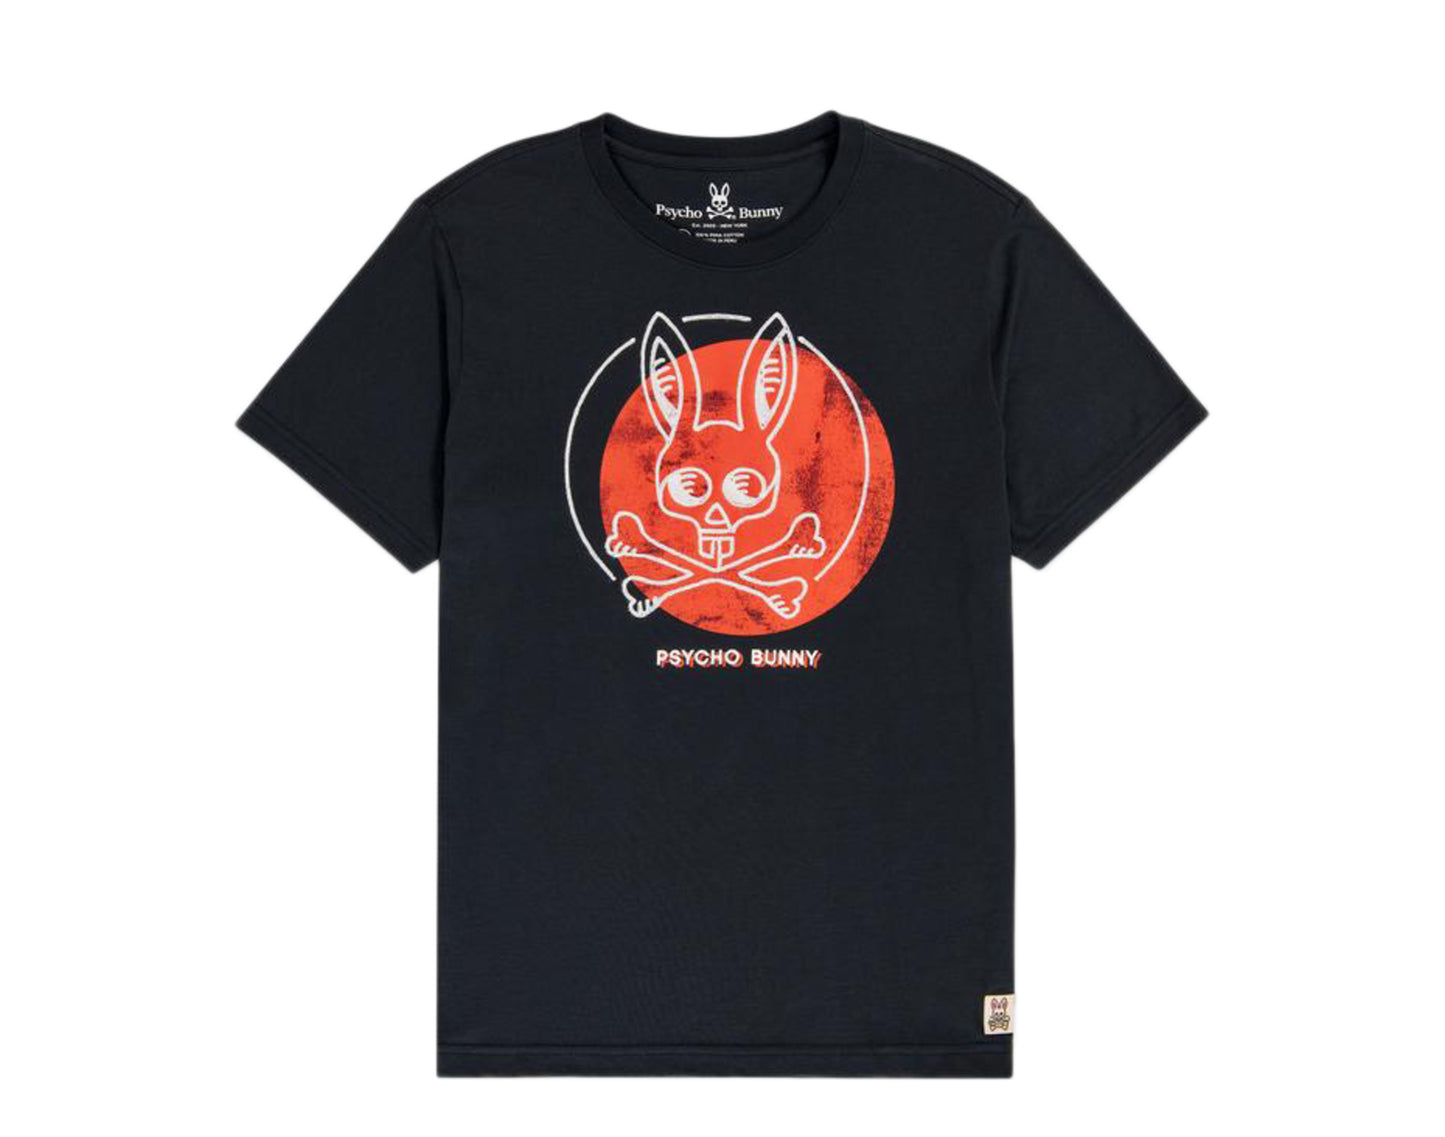 Psycho Bunny Chantry Graphic Navy/Orange Men's Tee Shirt B6U160L1PC-NVY